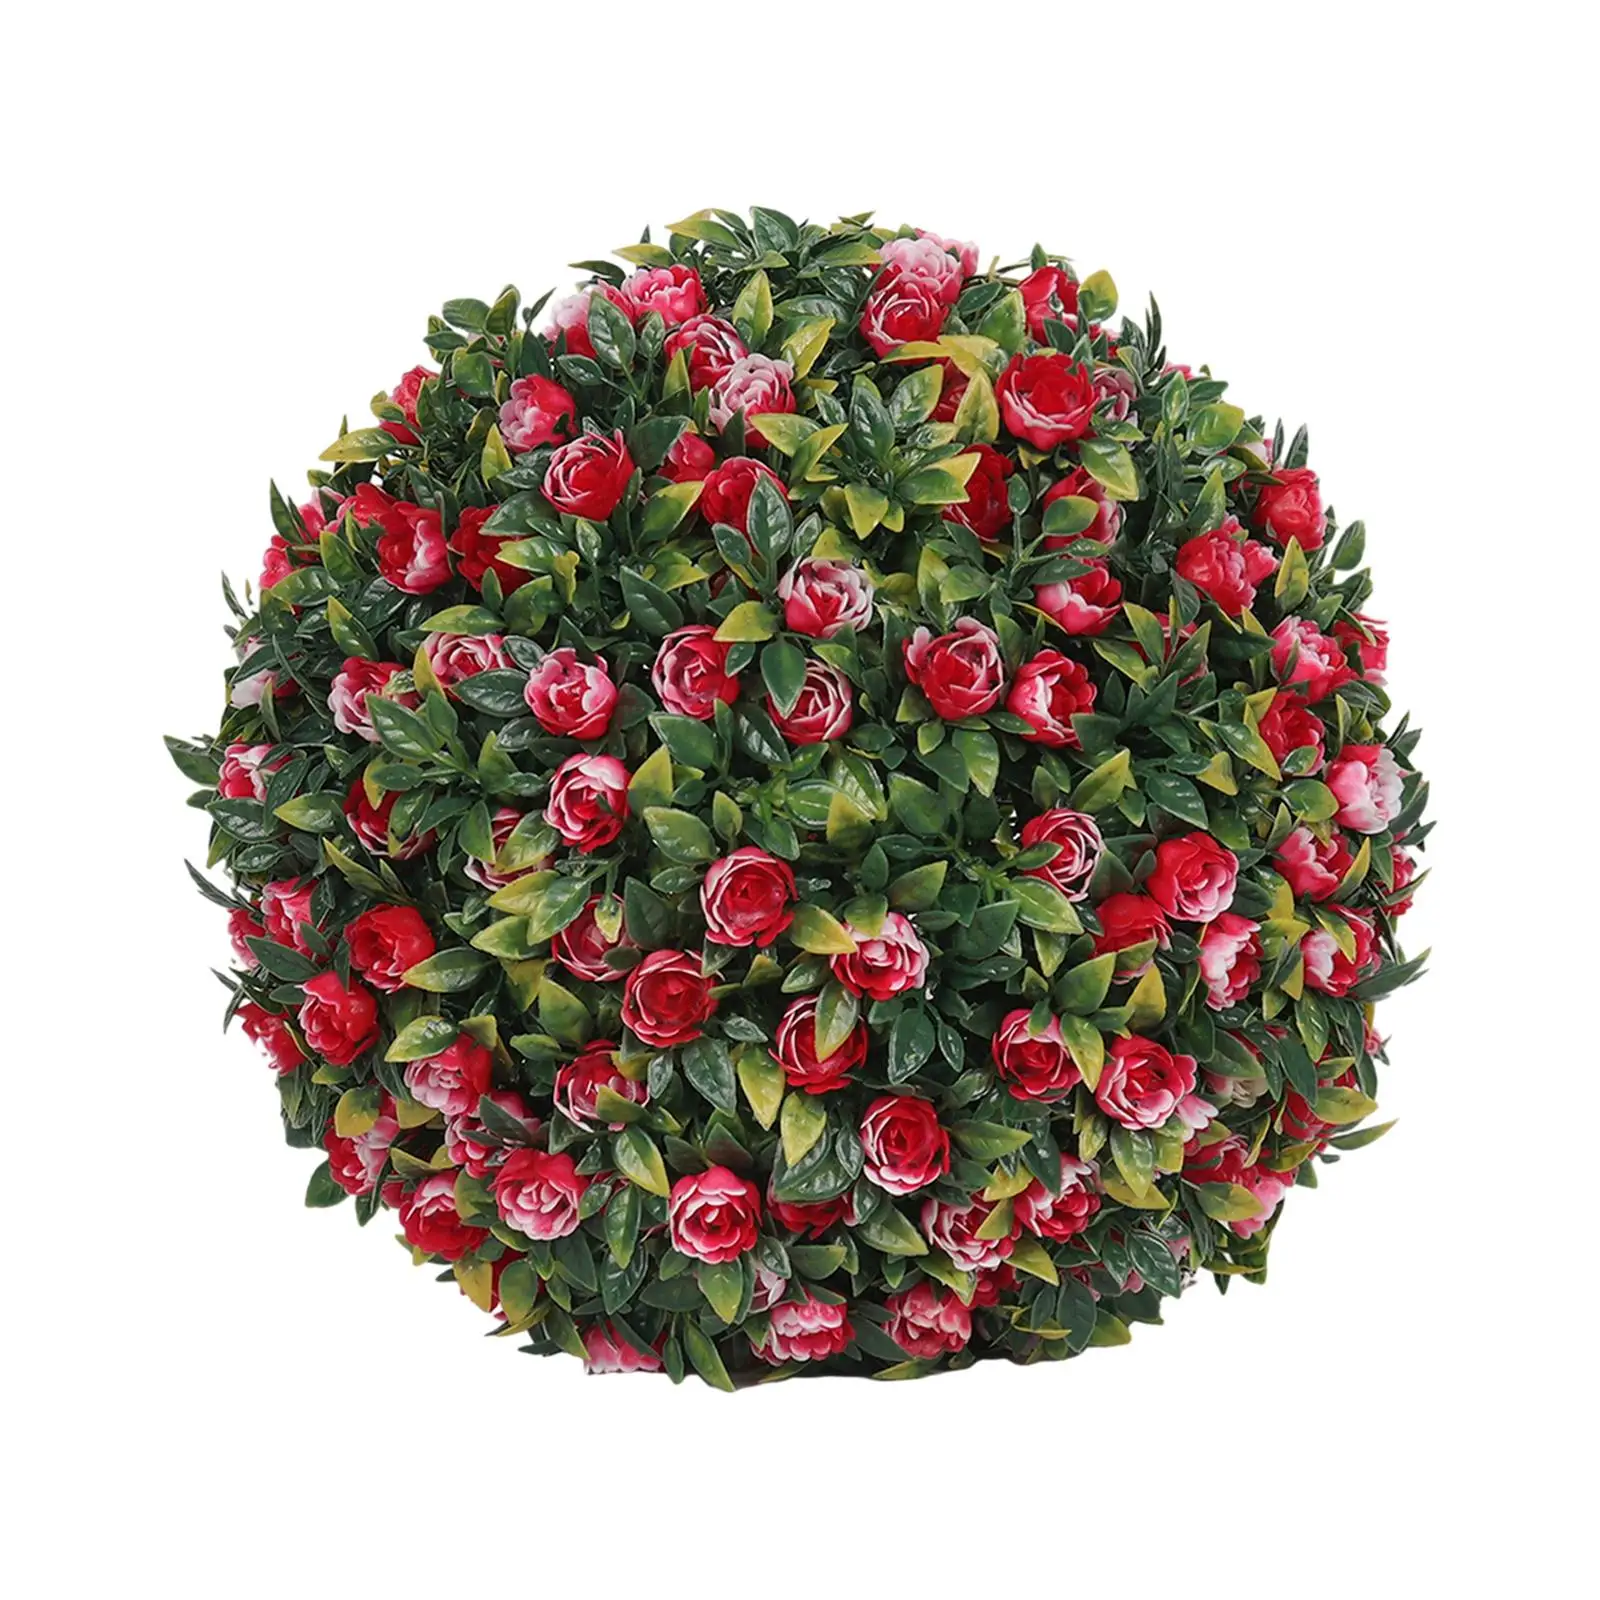 20cm Decorative Artificial Plants Artificial Topiaries Ball Elegant Accessories Durable Floral Decoration for Home Decor